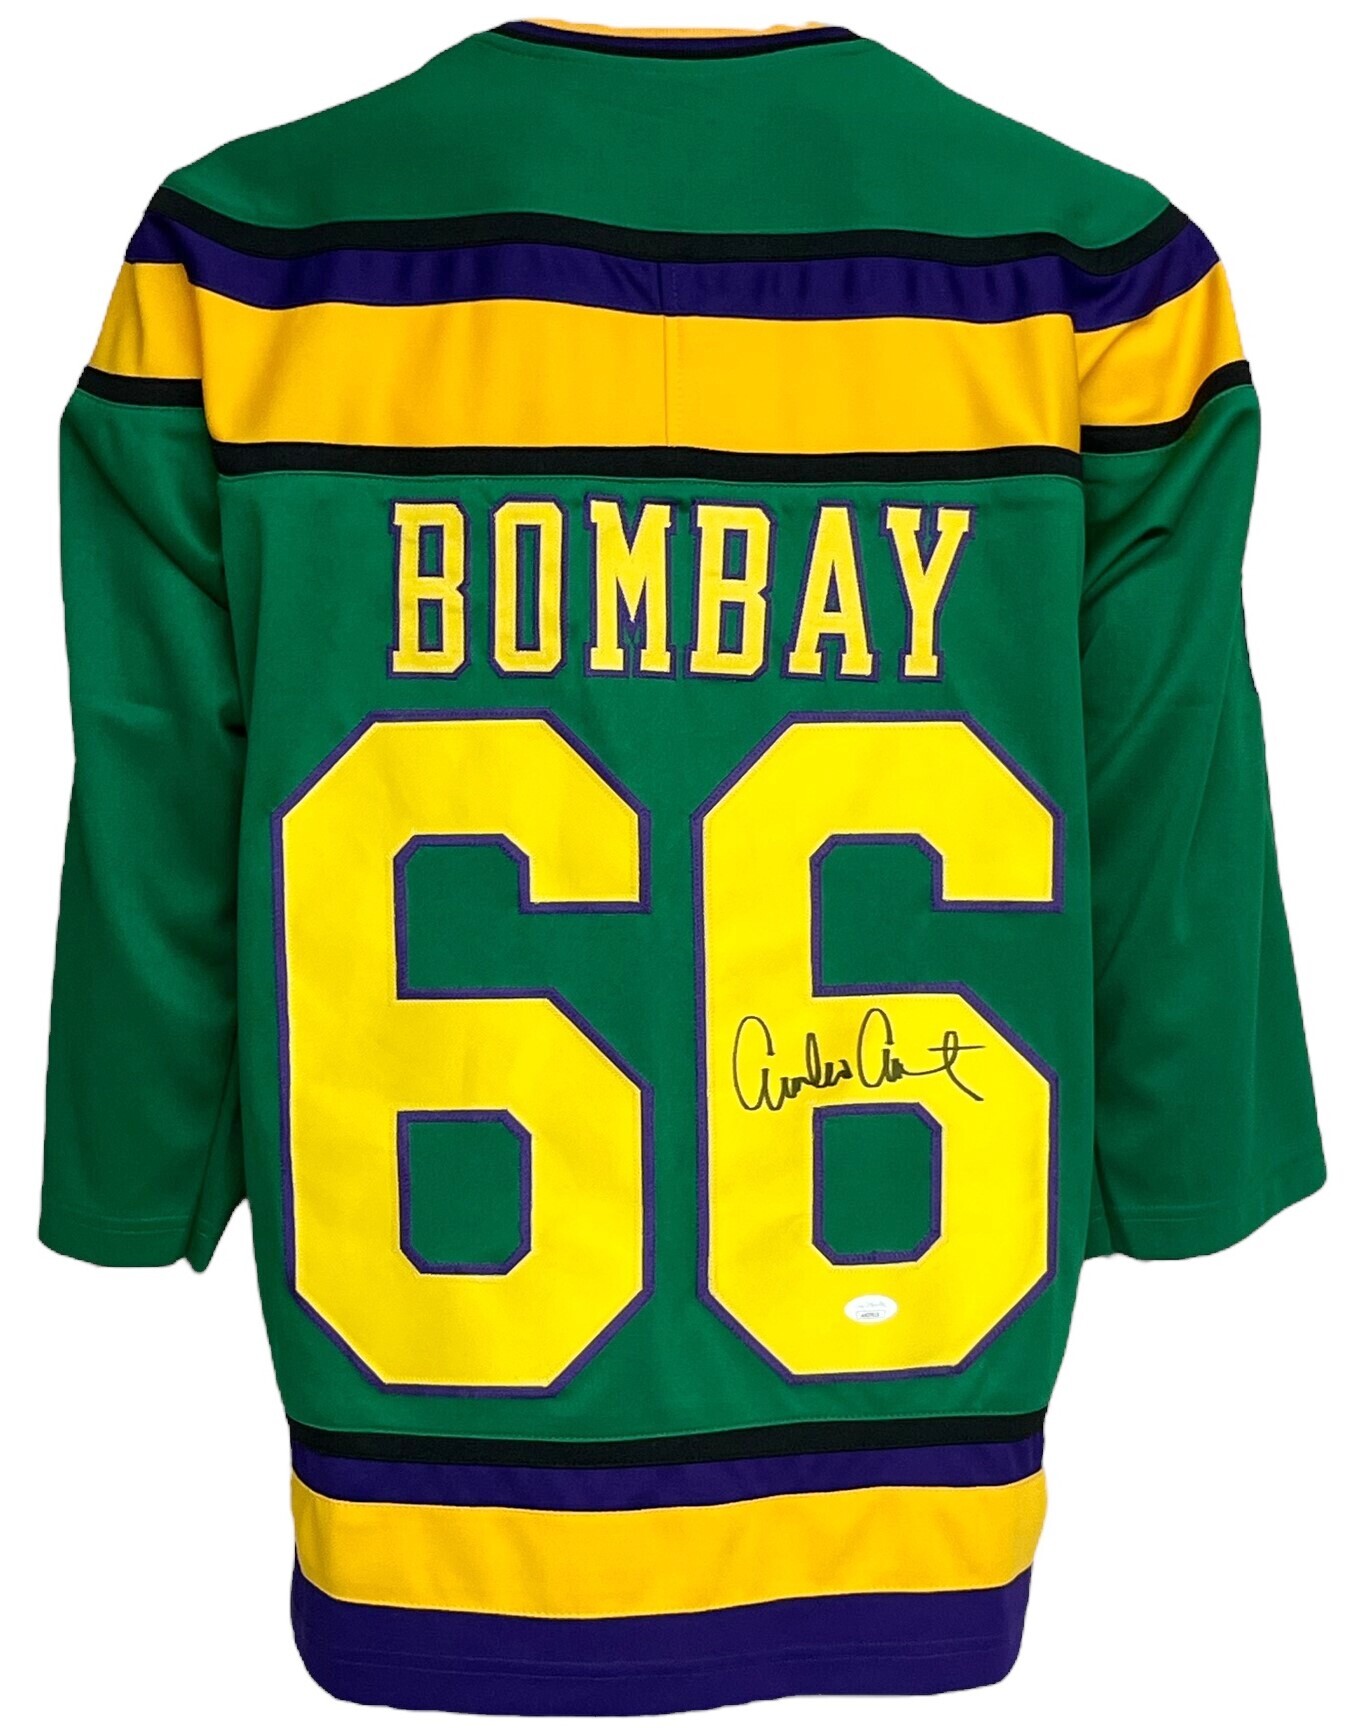 Emilio Estevez Signed The Mighty Ducks Bombay Jersey Inscribed Quack!  Quack! Quack! & Go Ducks! (Schwartz COA)